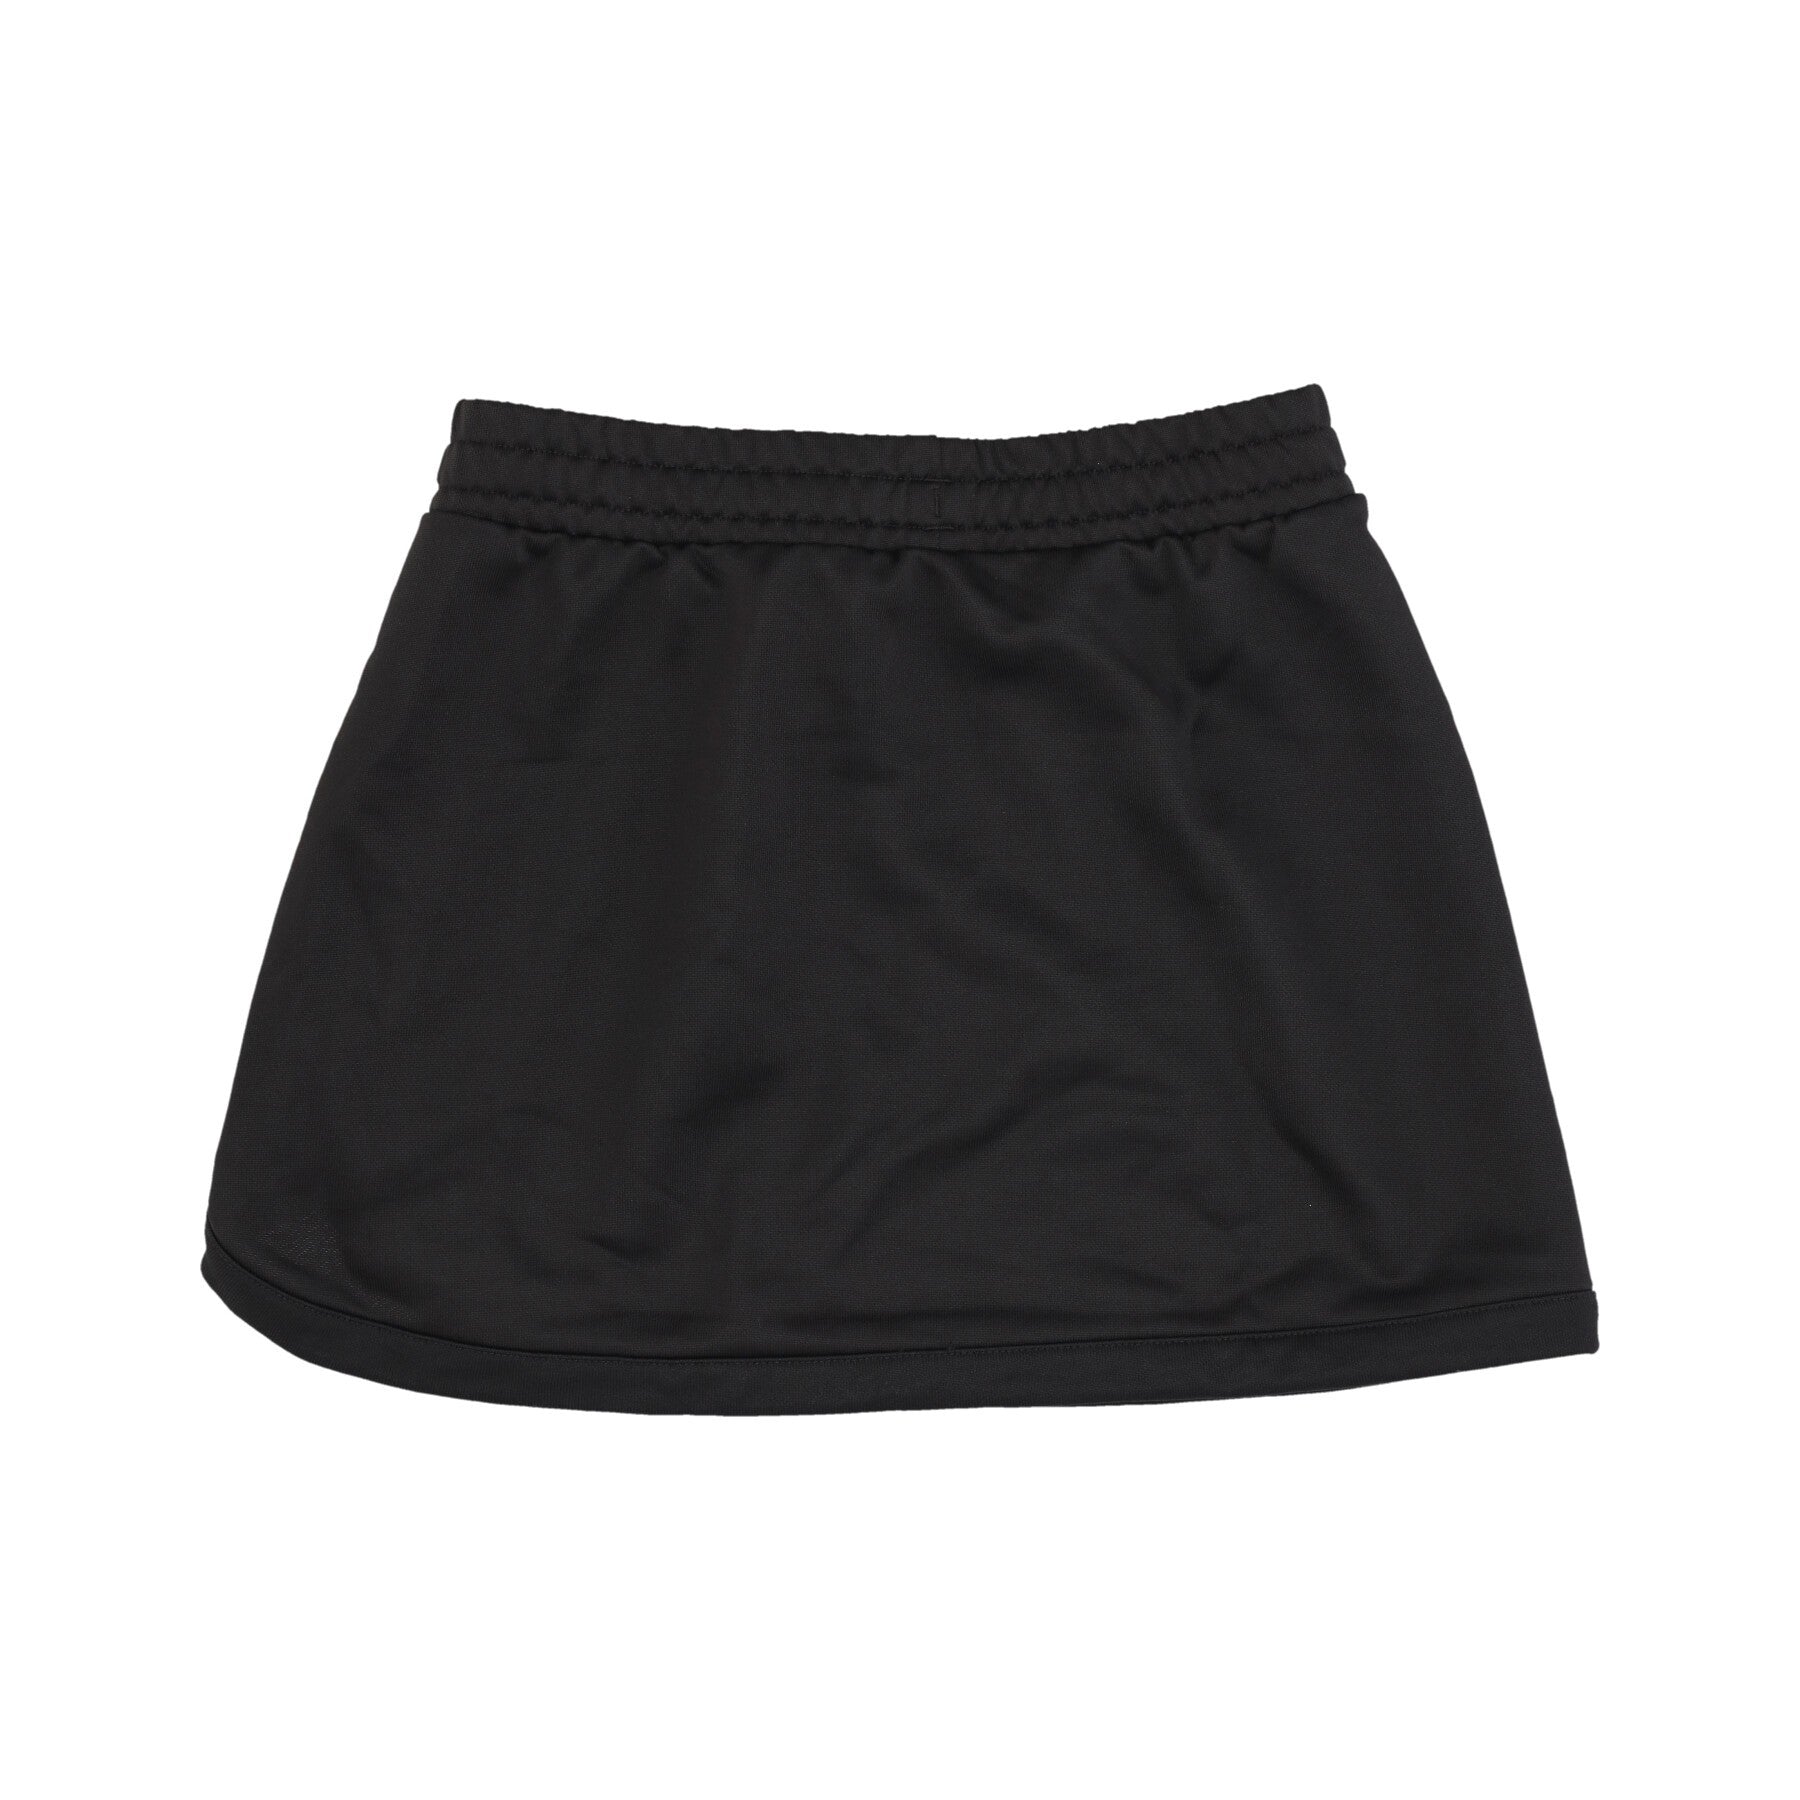 Classics A-line Skirt Black Women's Short Skirt